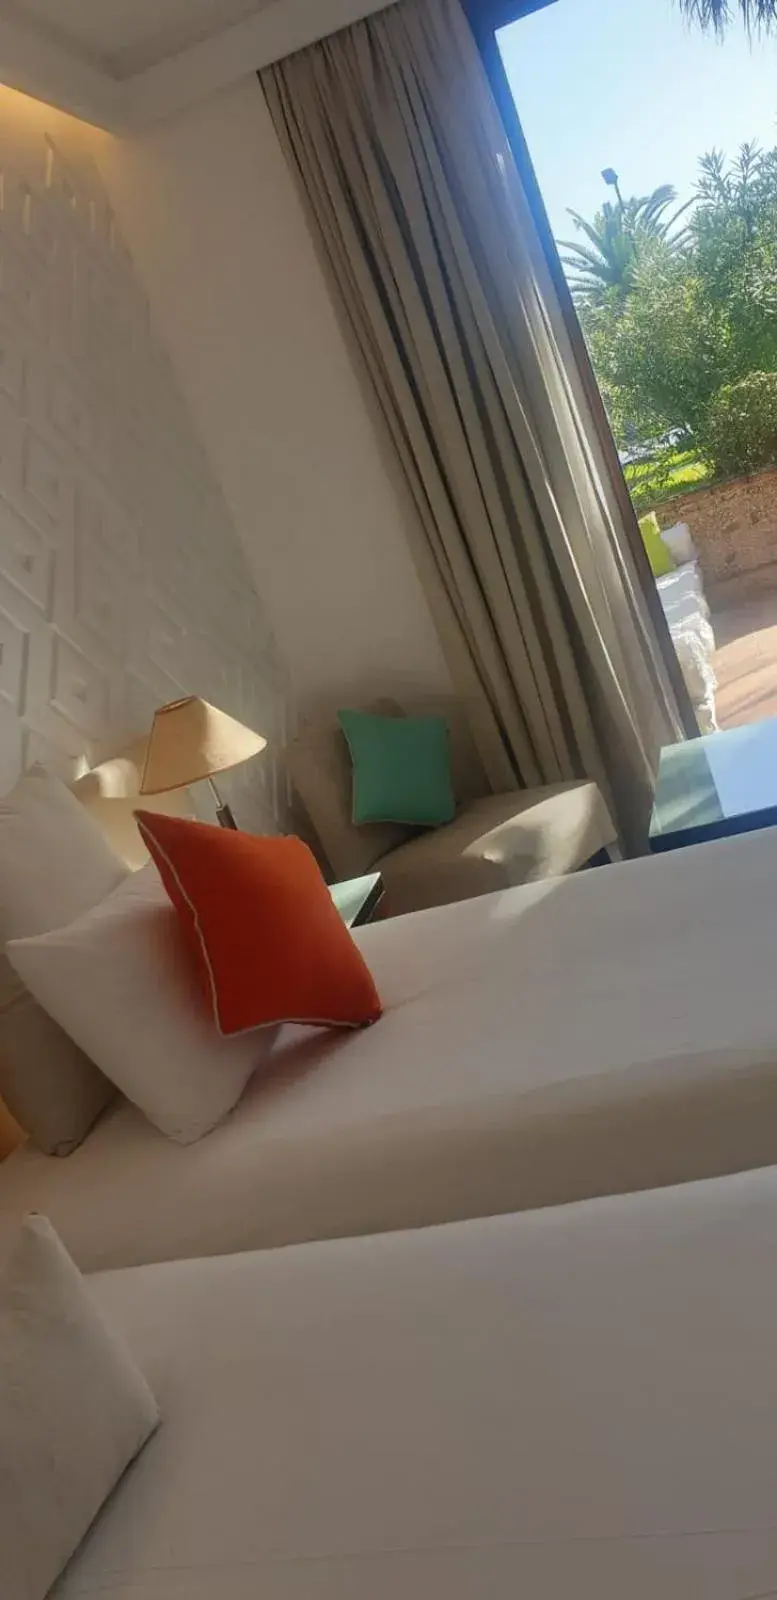 Bed in Marina Smir Hotel & Spa